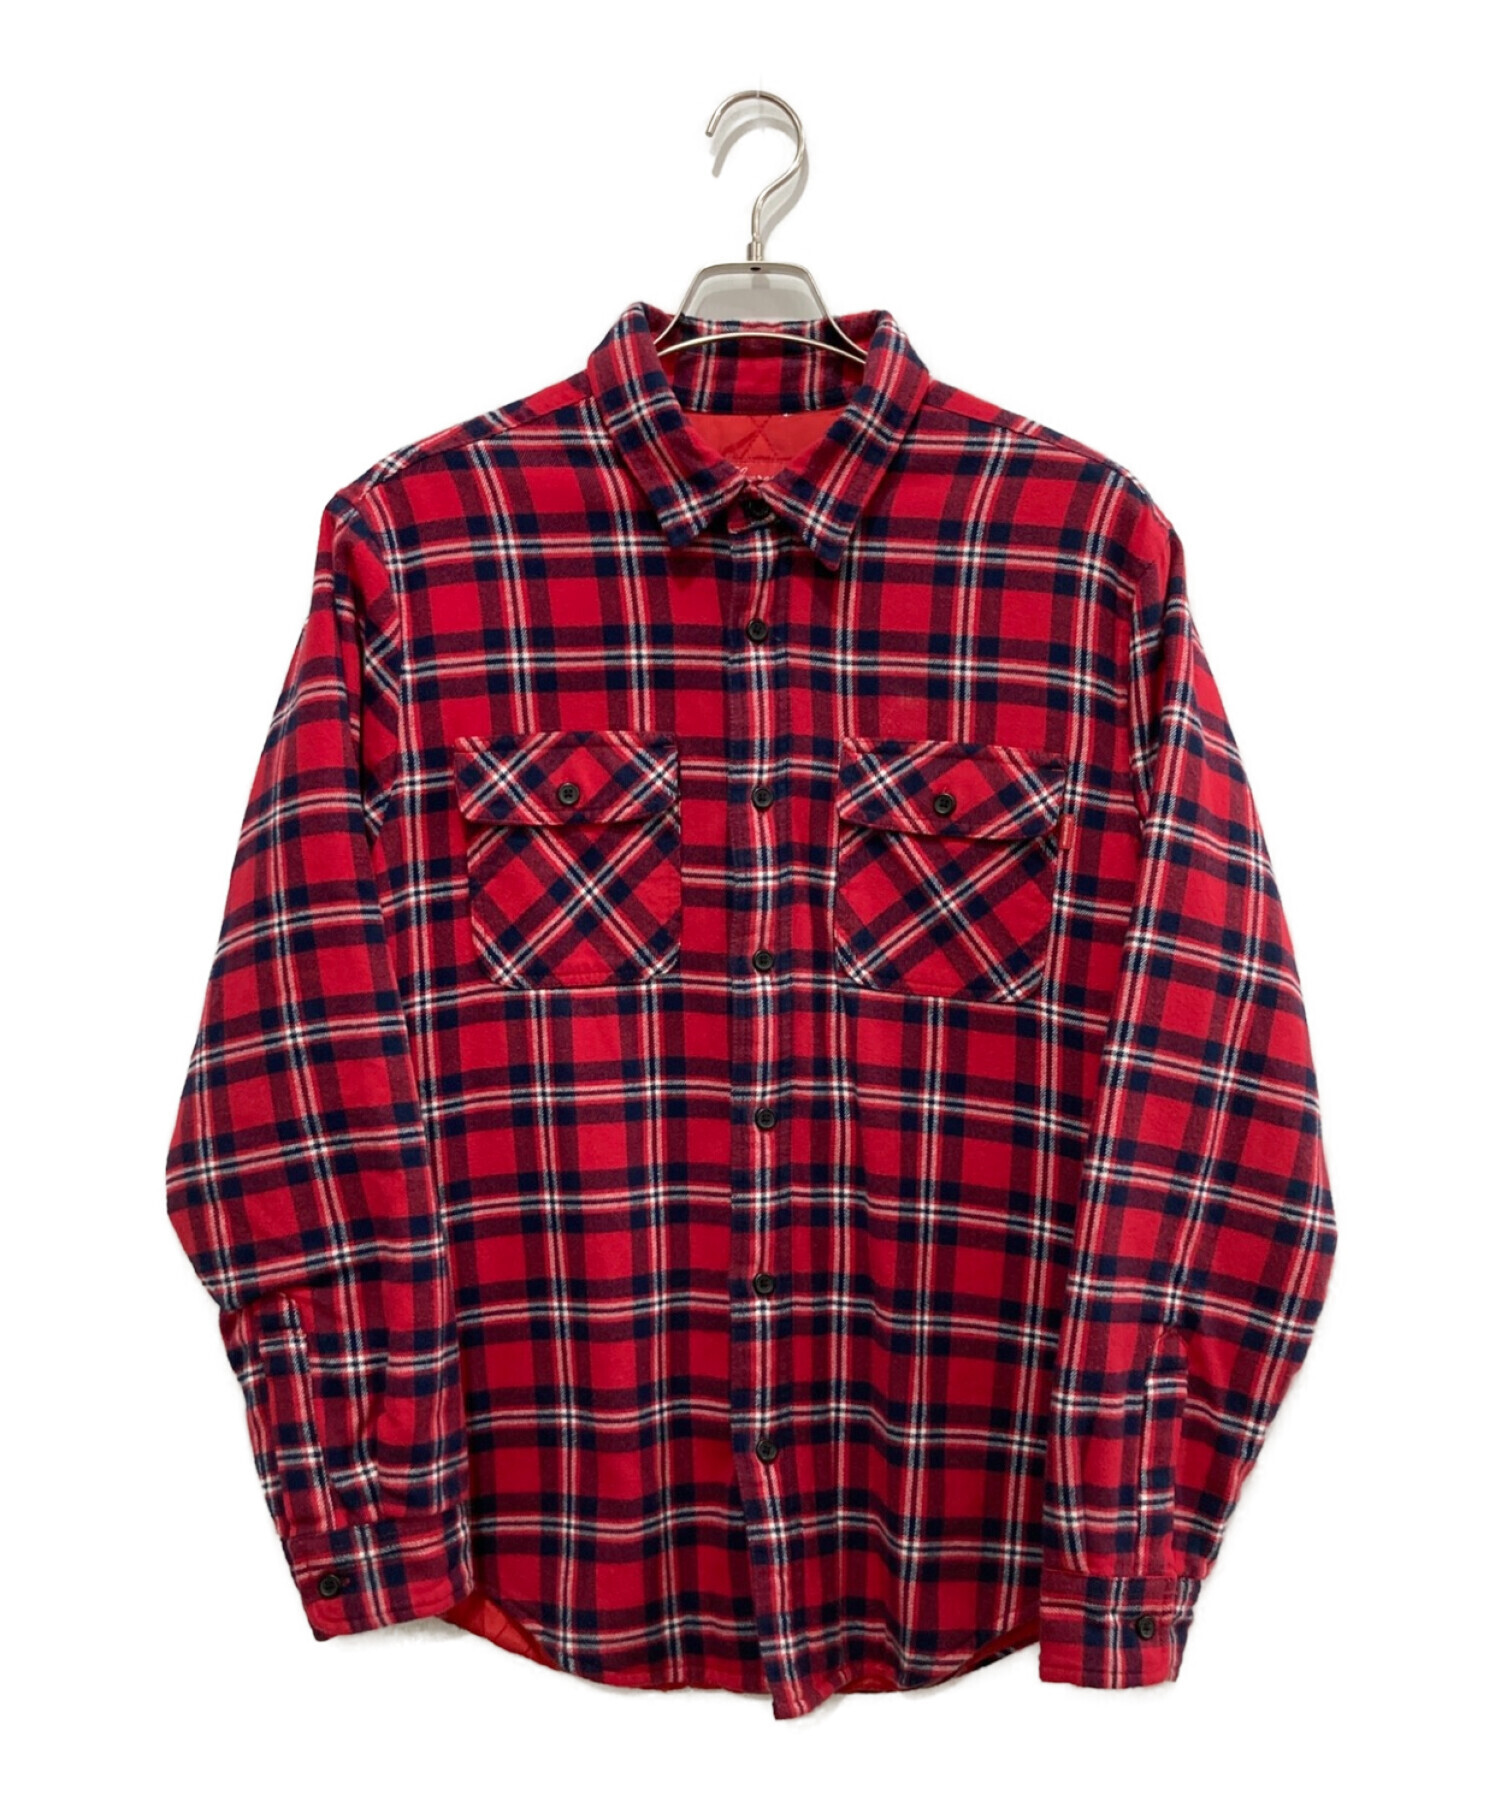 SUPREME (シュプリーム) quilted arc logo flannel shirt レッド×ネイビー サイズ:M